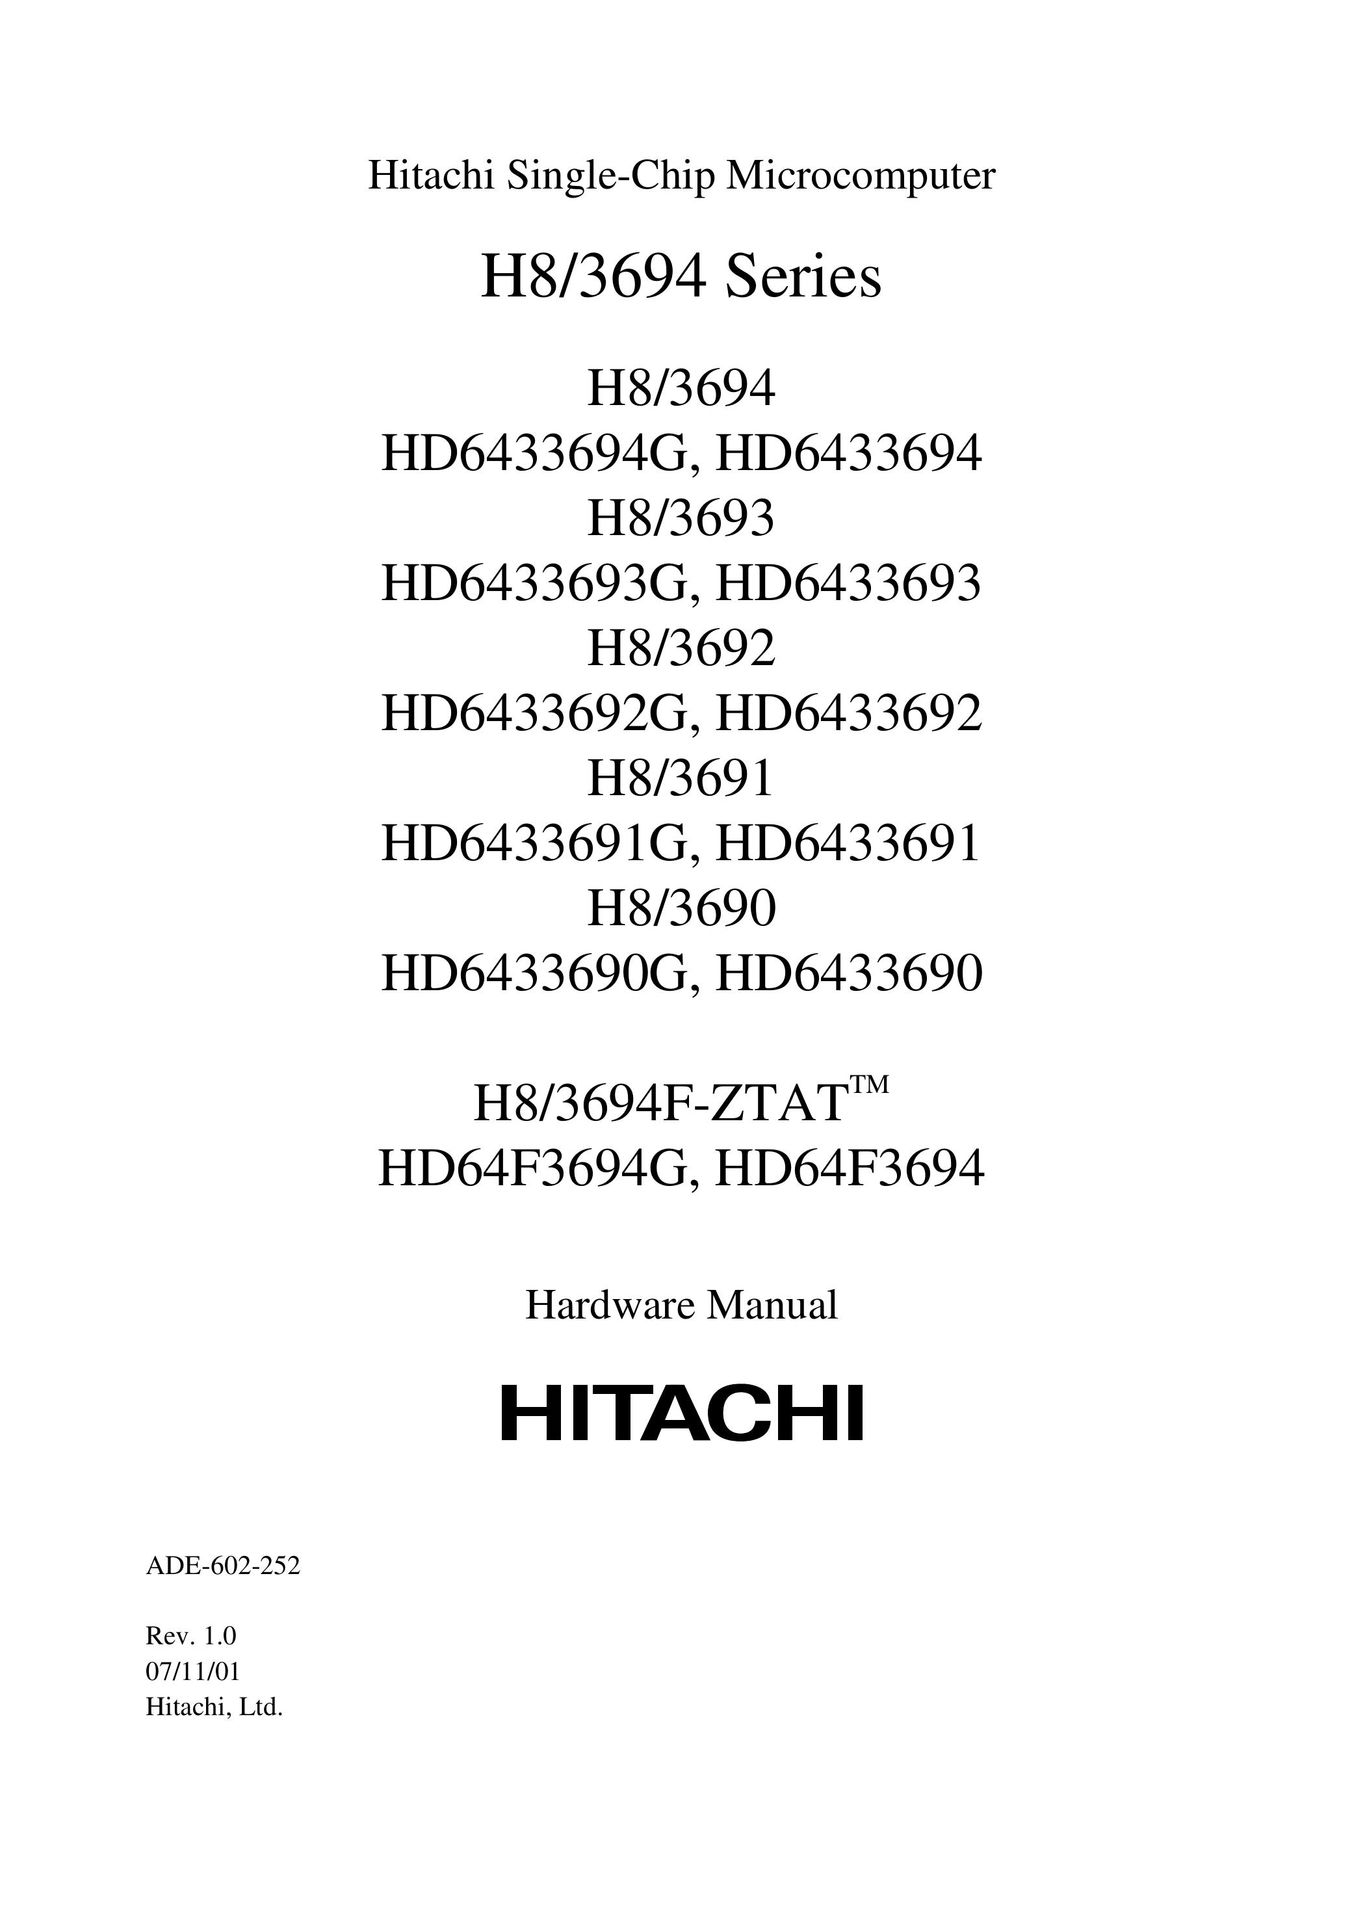 Hitachi HD6433693G TV Mount User Manual